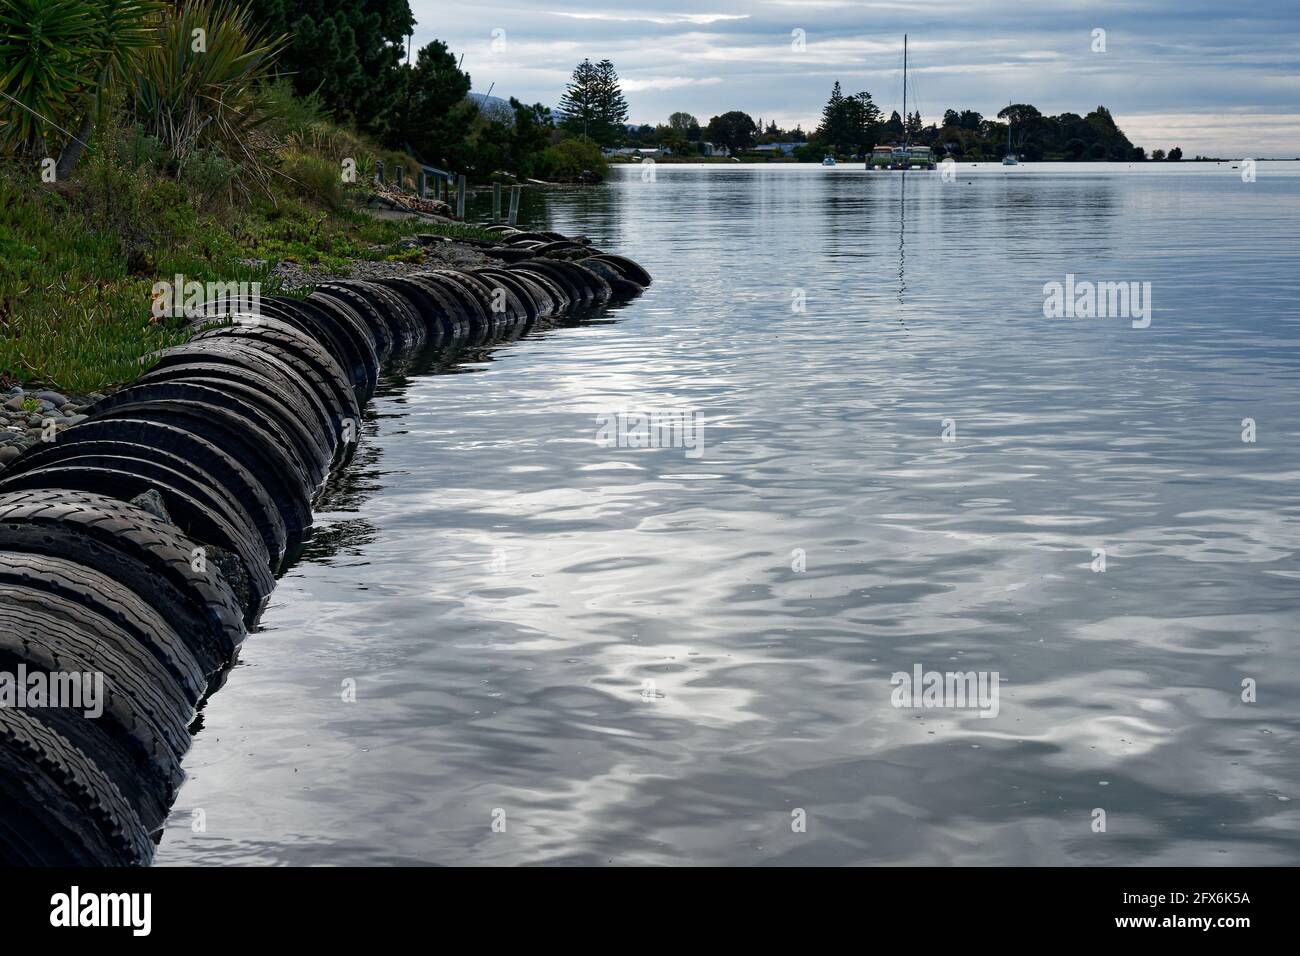 Old tires being used as a sea wall to combat rising sea levels, Trewavas Street, Motueka, Tasman region, New Zealand. Stock Photo